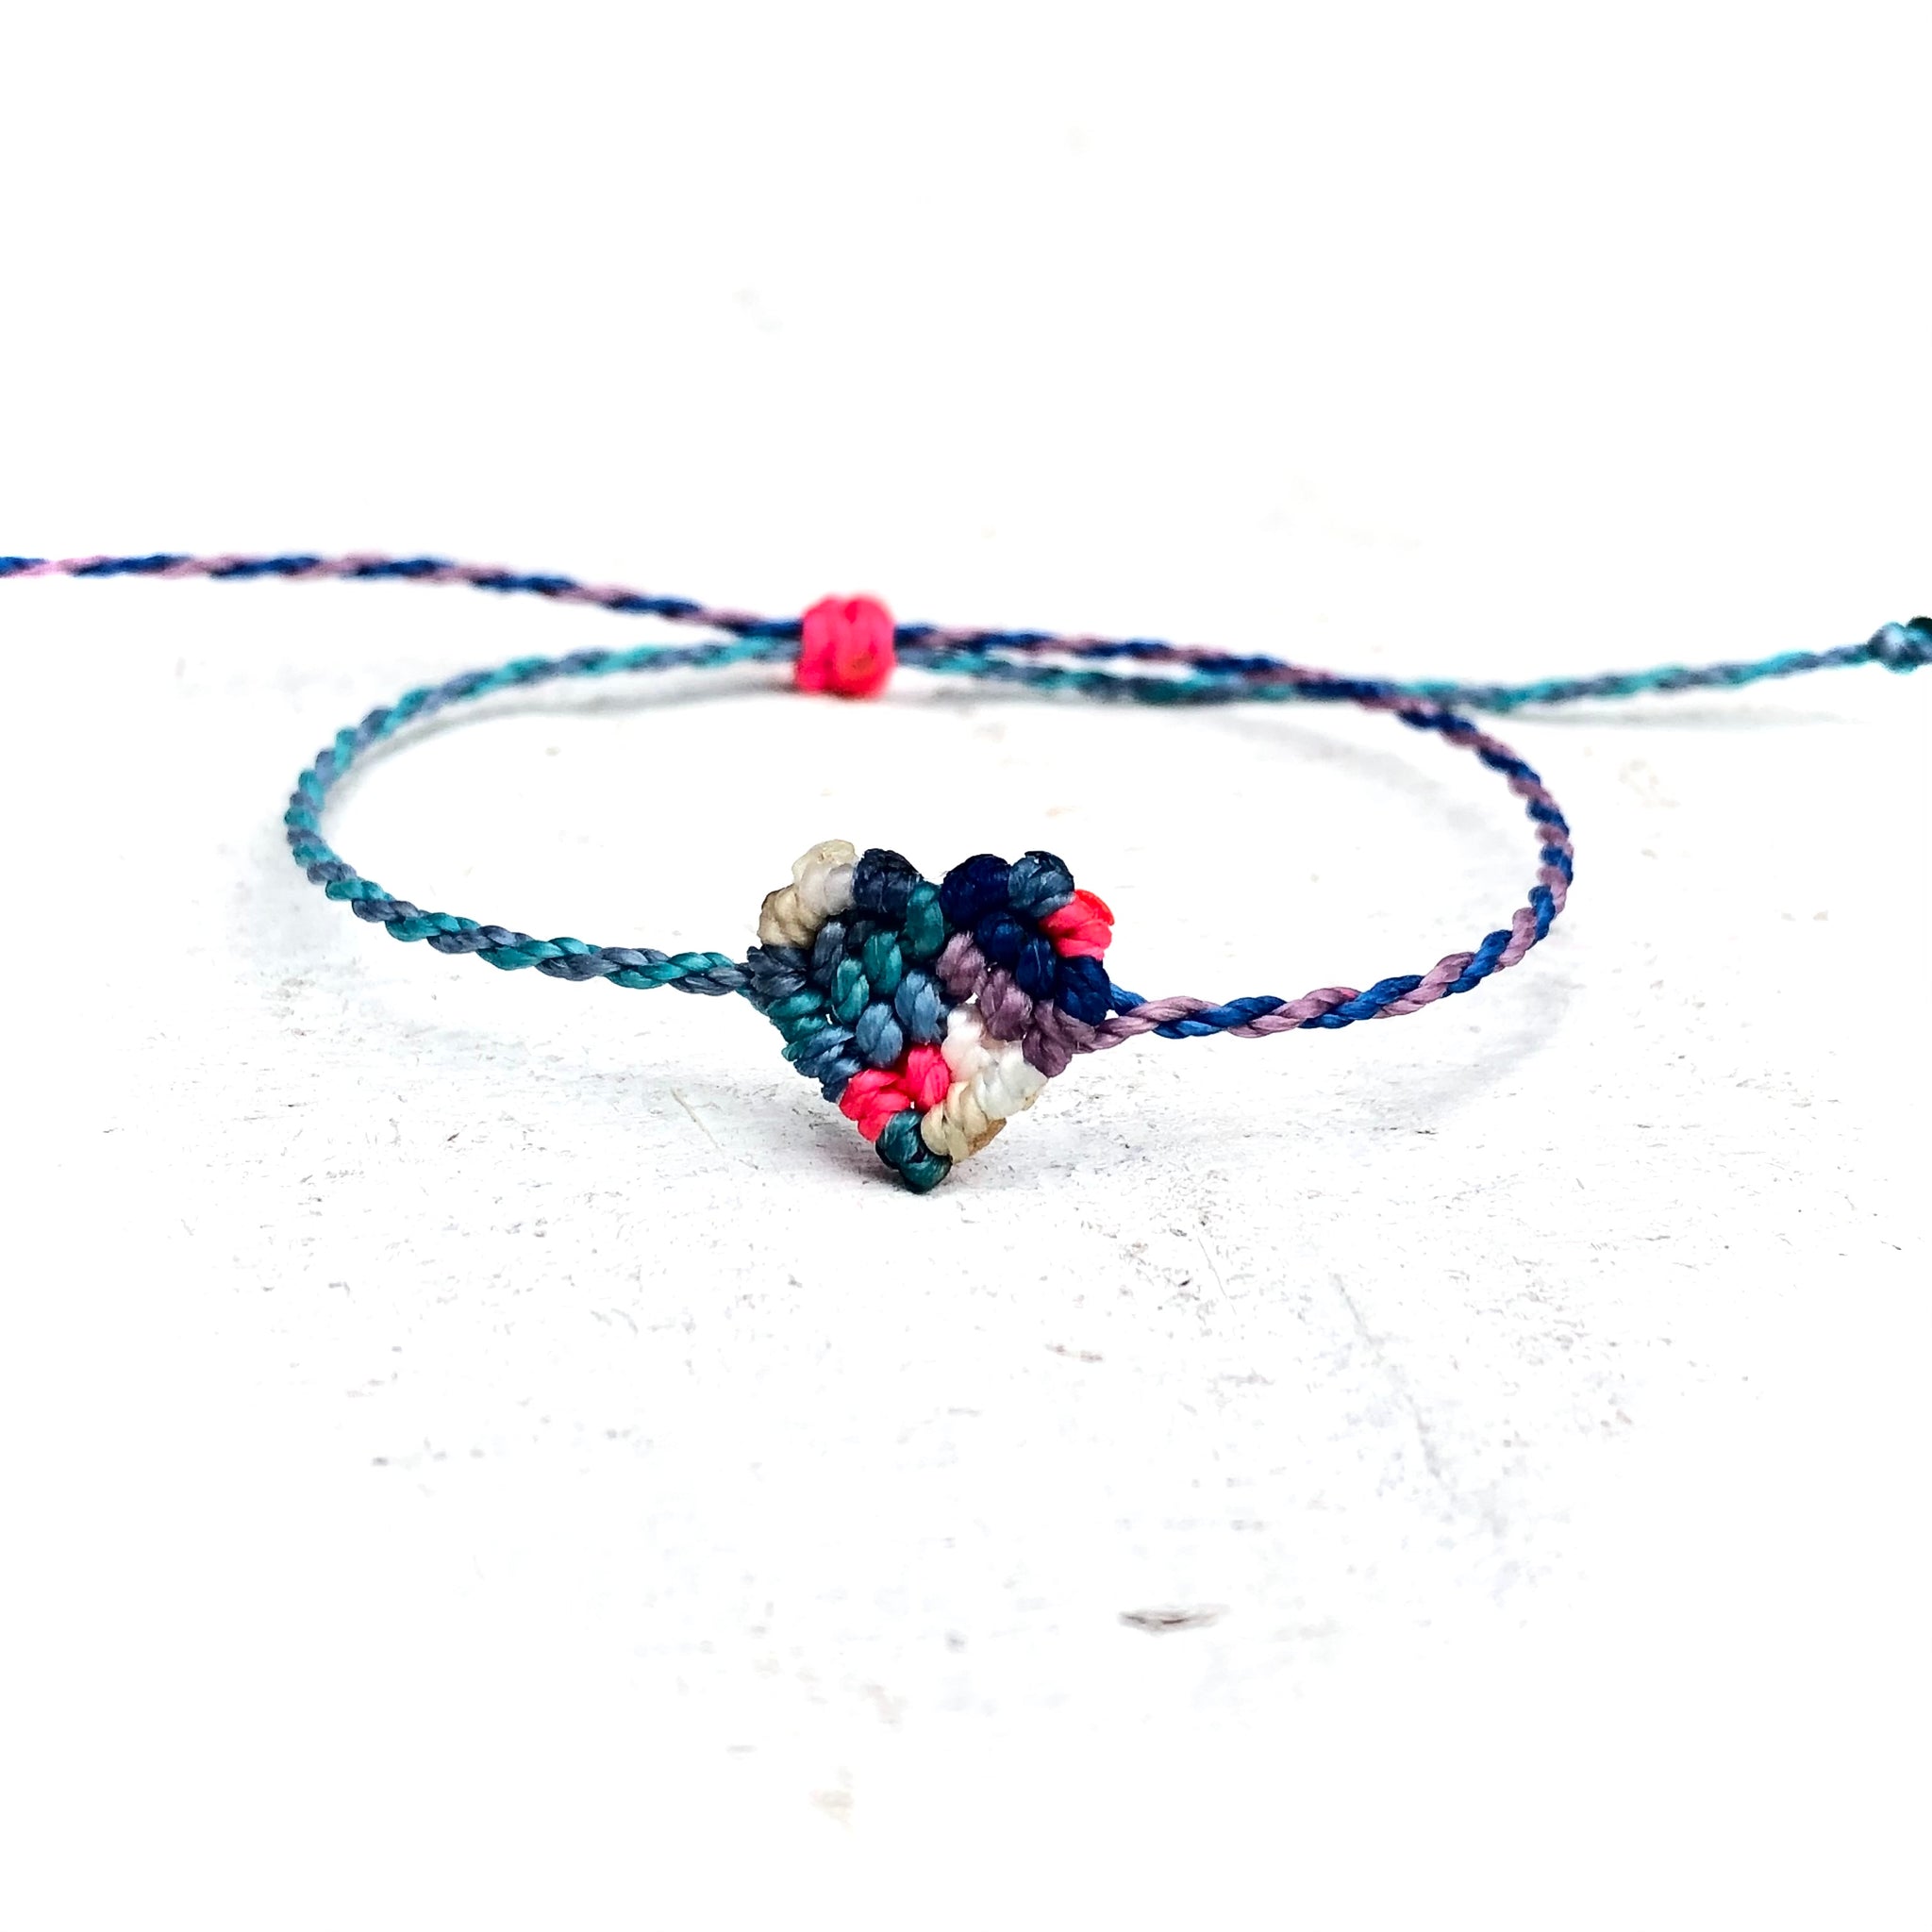 Multicolor Heart Macrame Bracelet - horizontal - multicolor